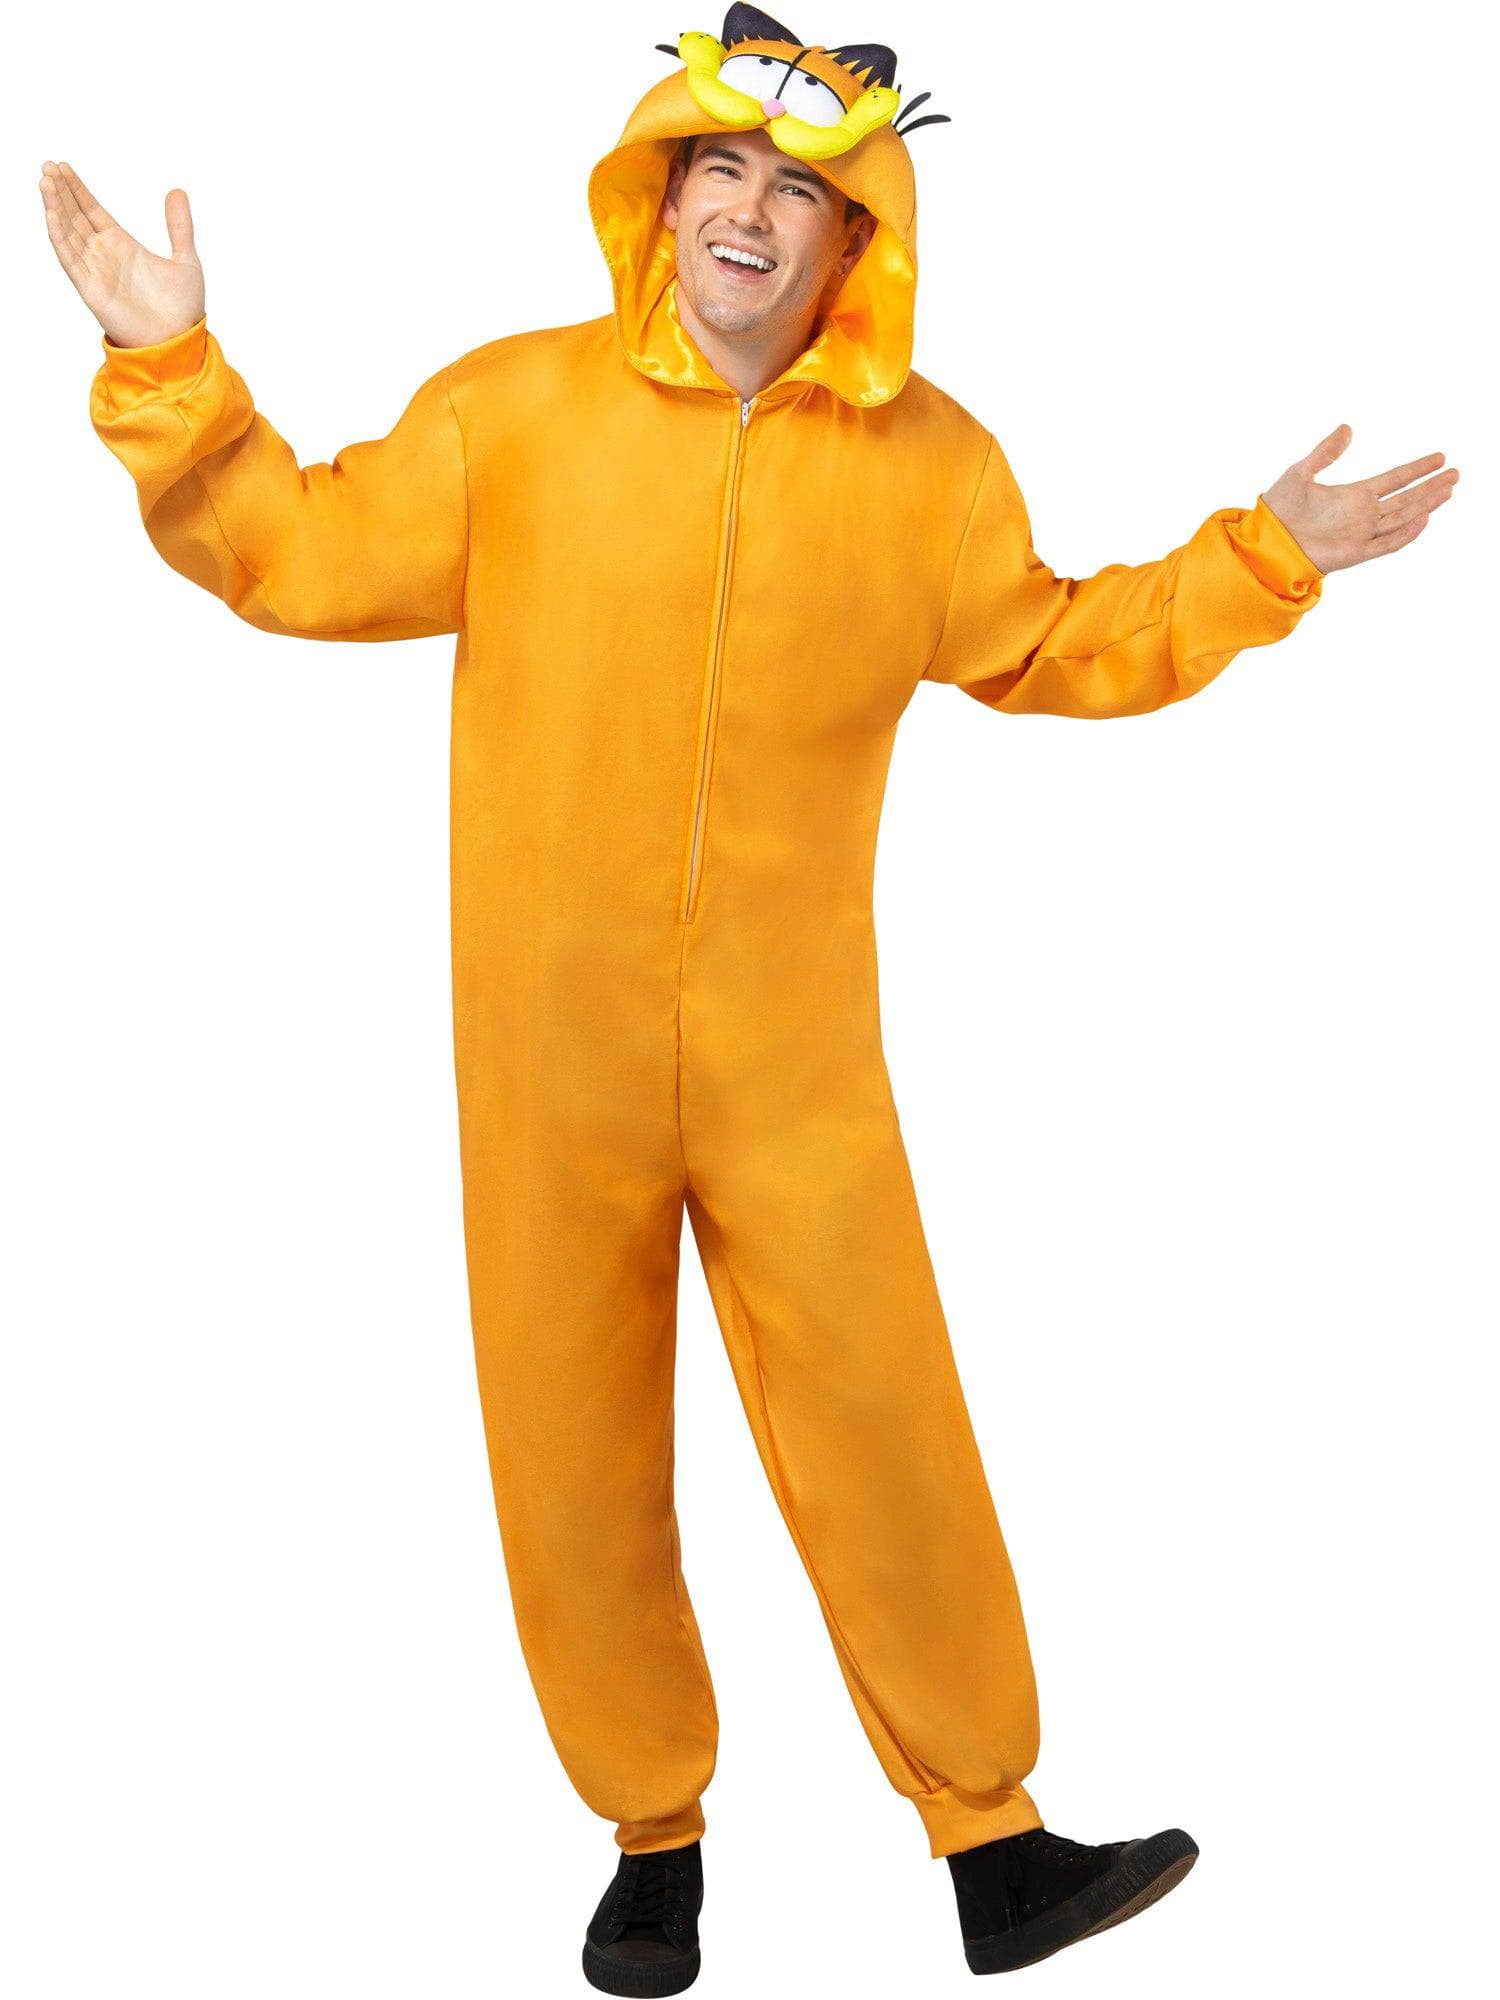 Garfield Adult Costume - costumes.com